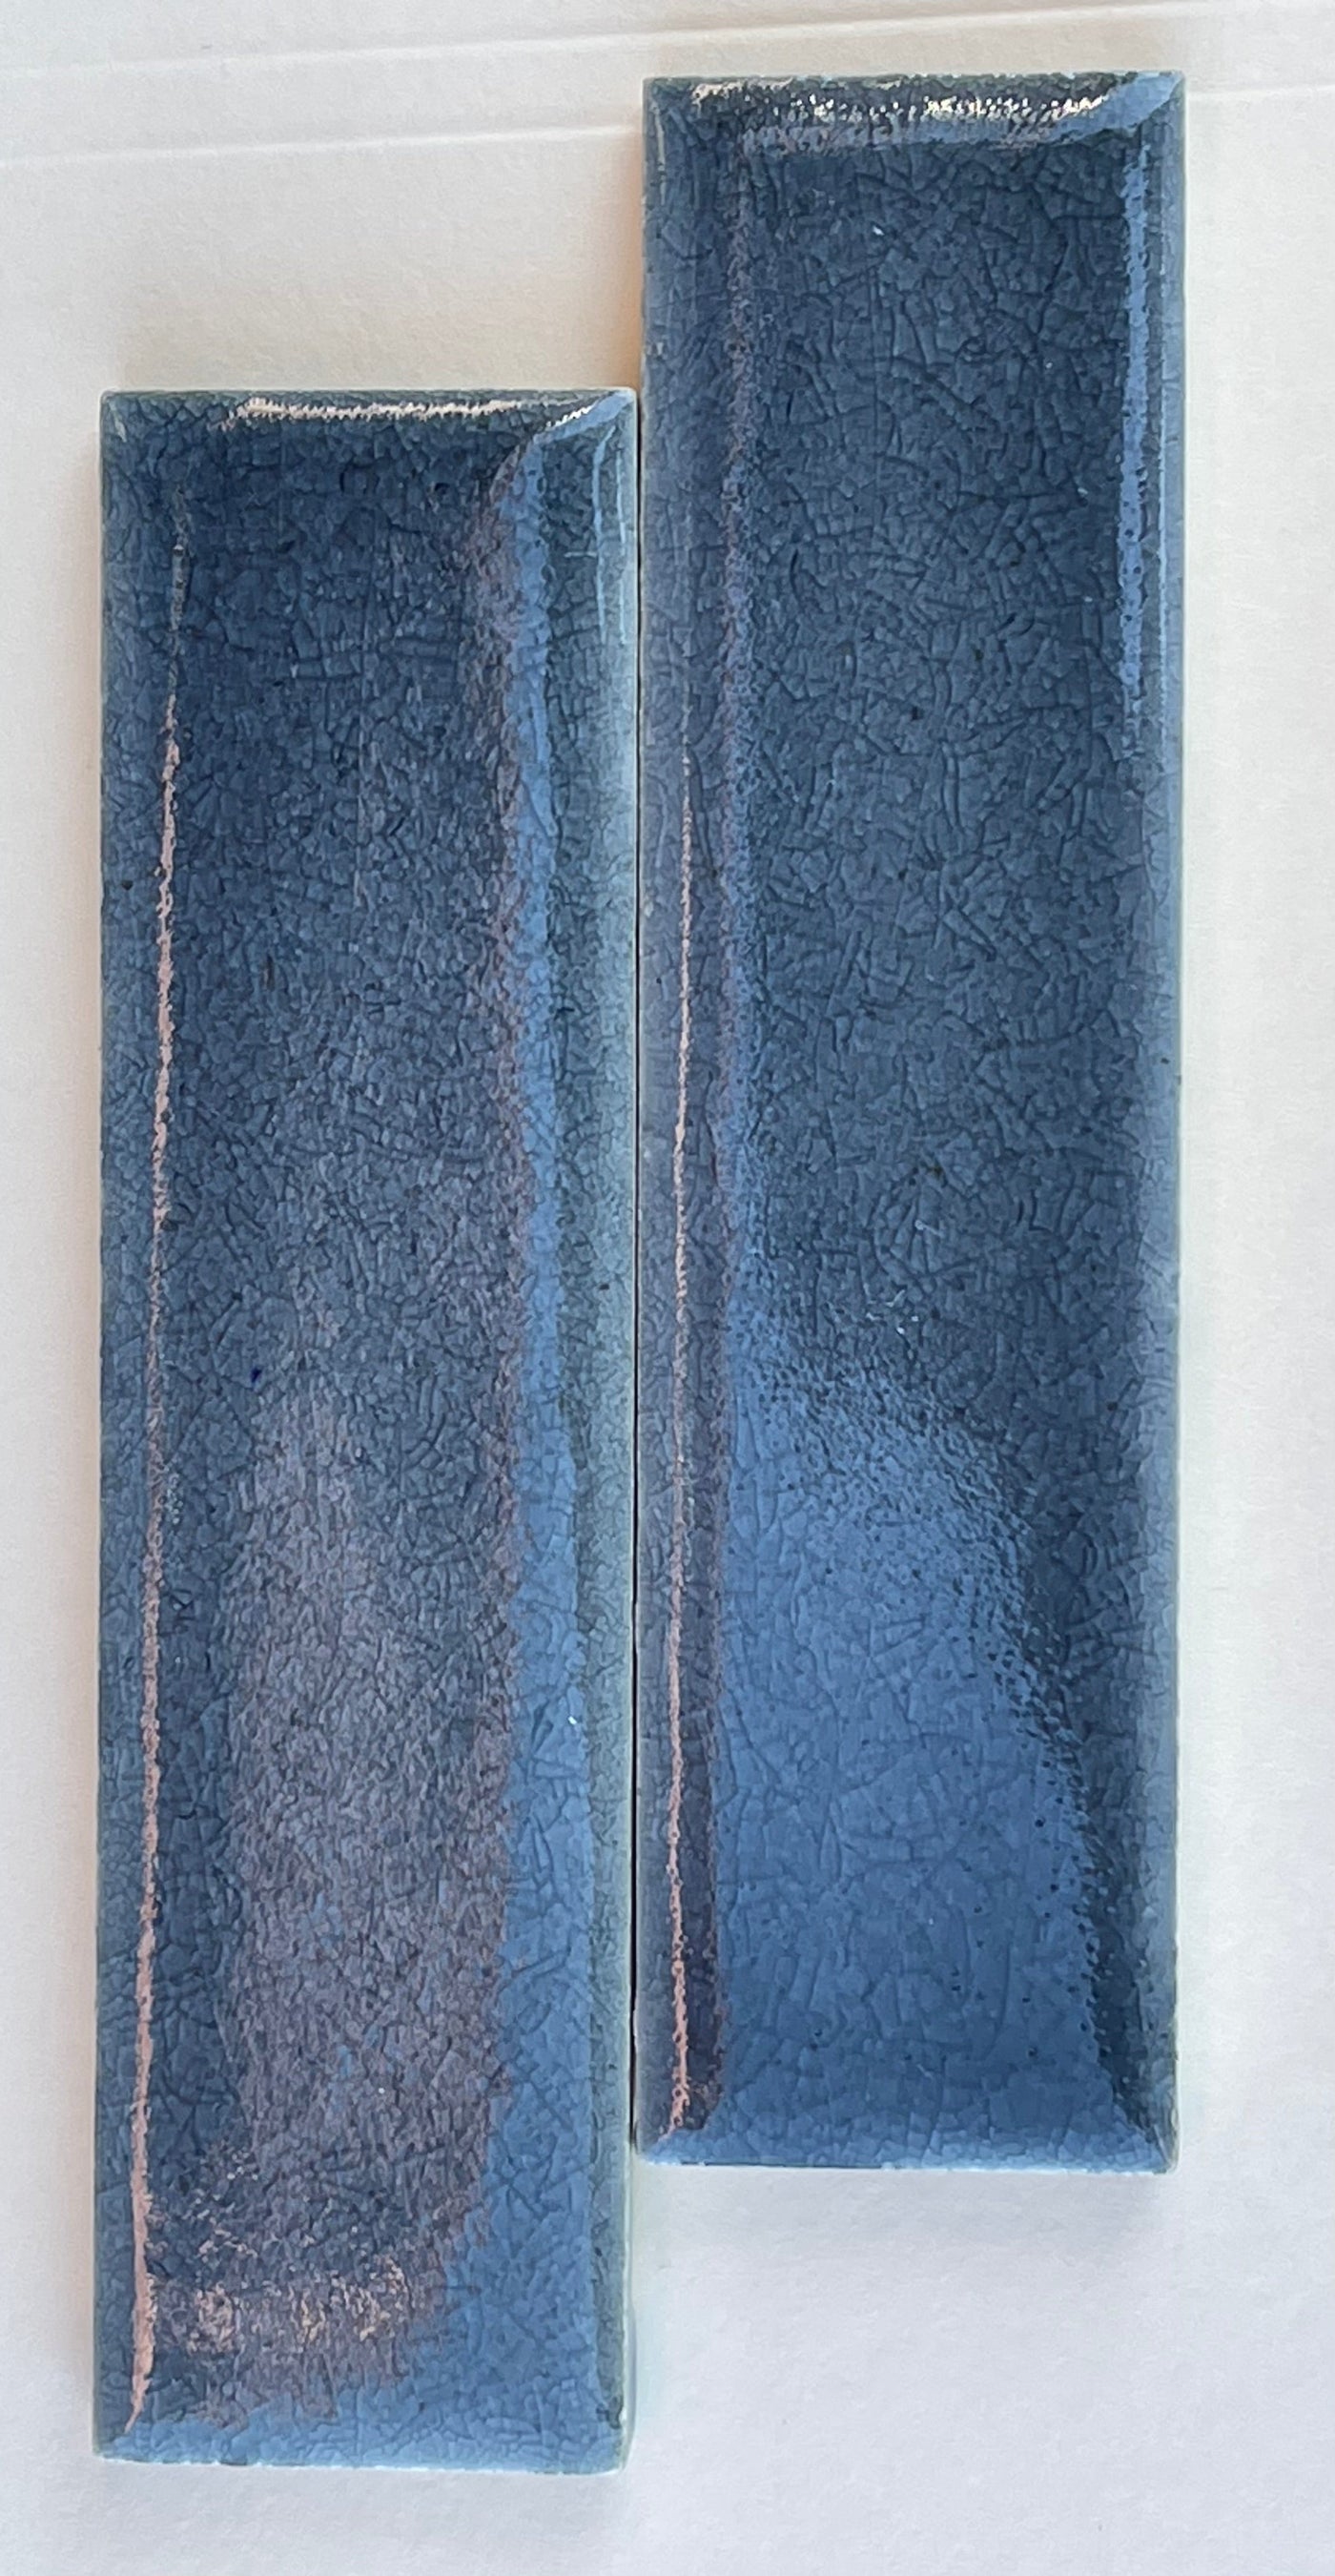 Copy of SR-108 BLUISH GRAY CRACKLE ( victorian fireplace tile